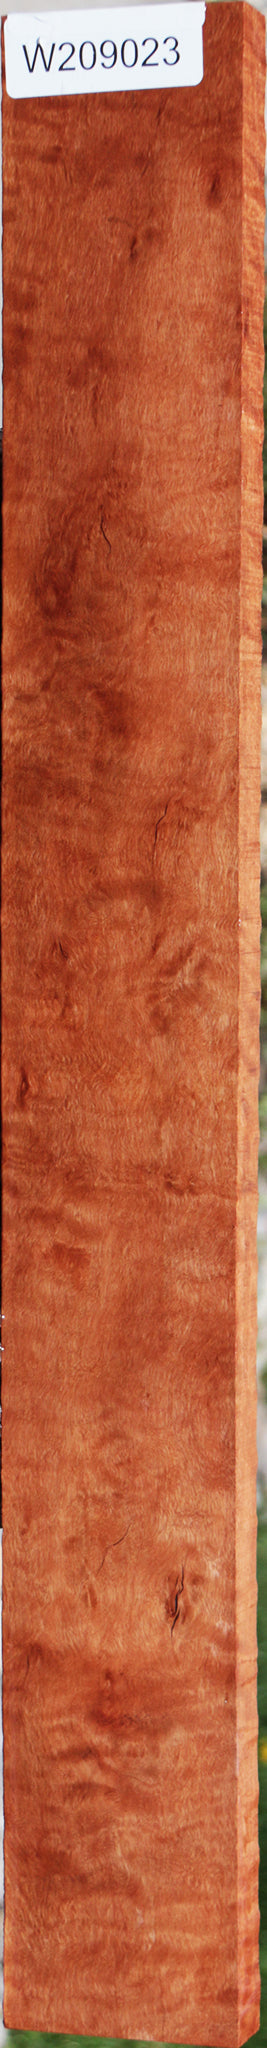 Extra Fancy Rustic Rambutan Lumber